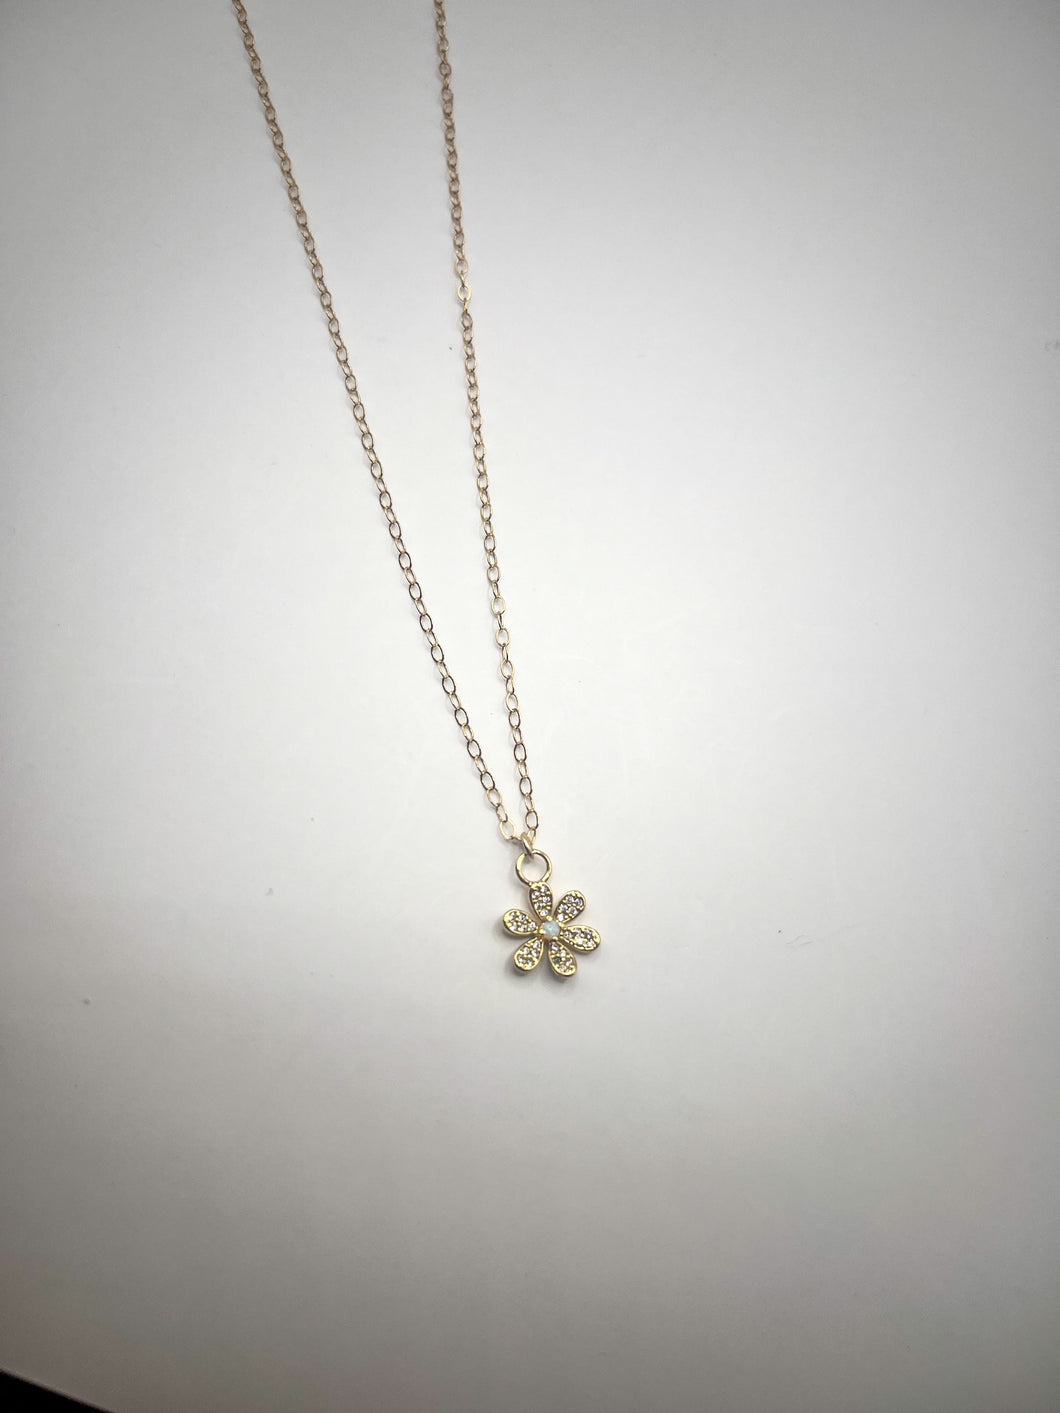 Flower Opal Necklace - Gold Filled